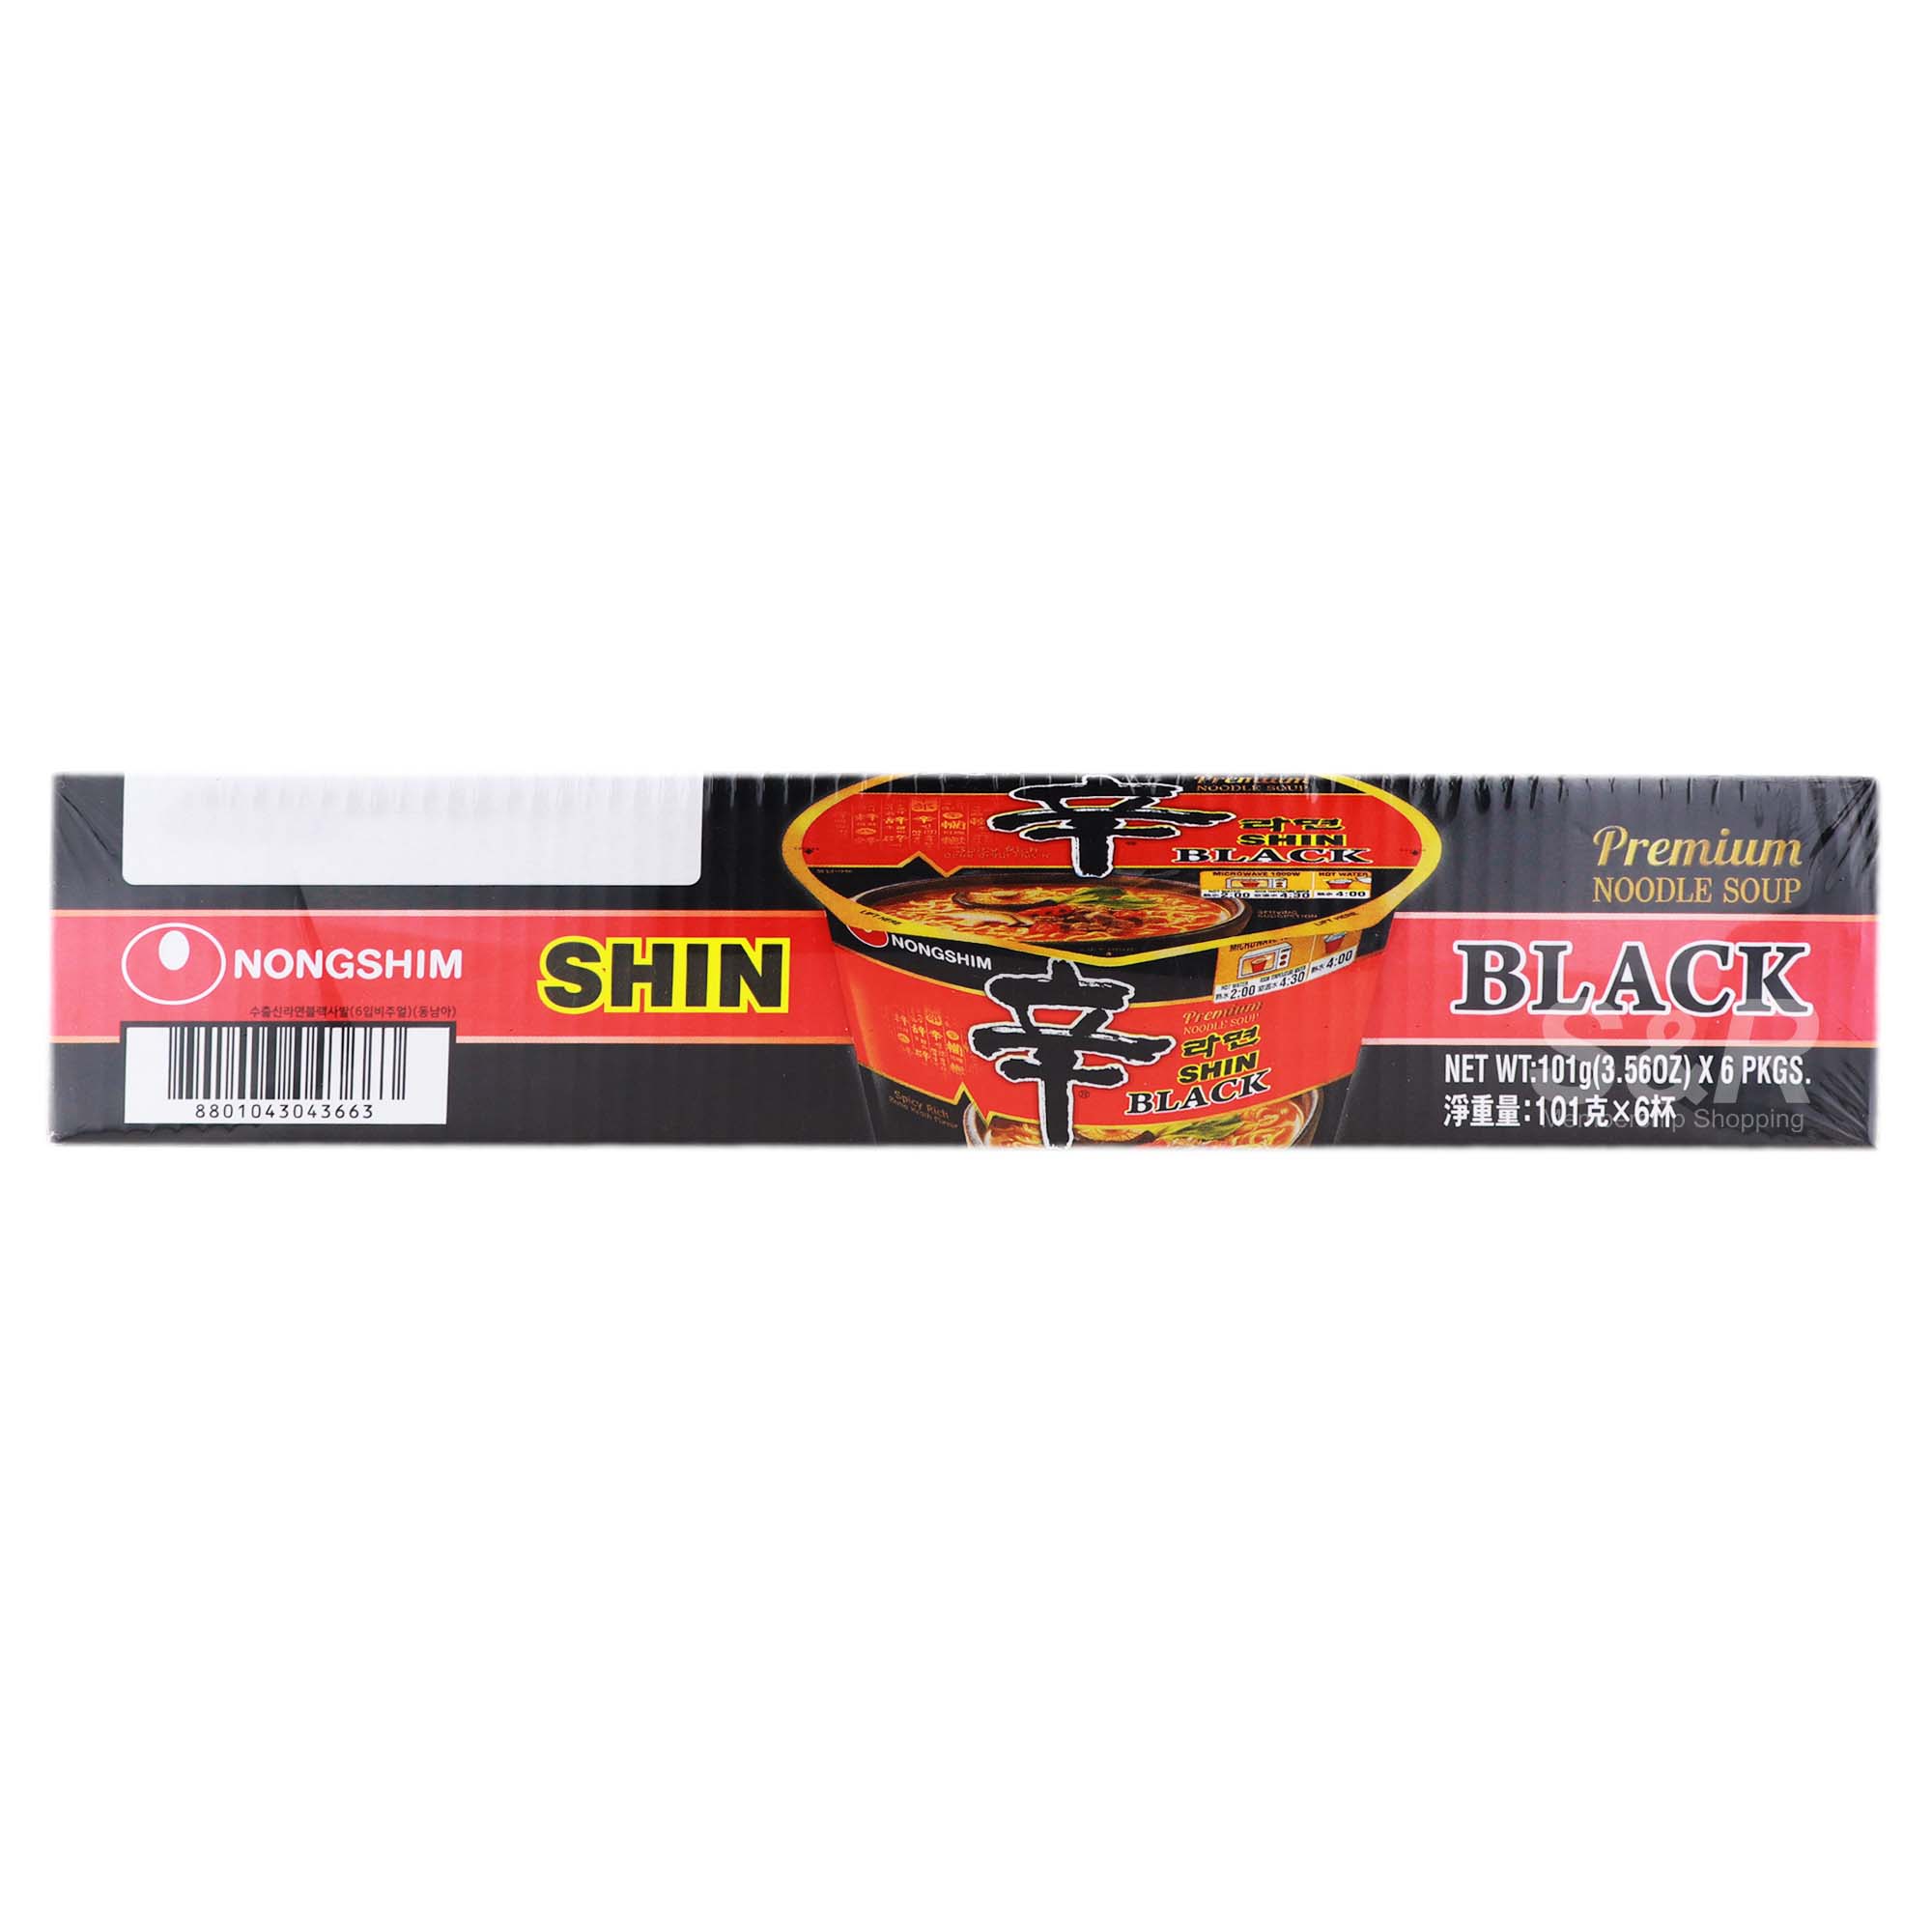 Shin Black Spicy Rich